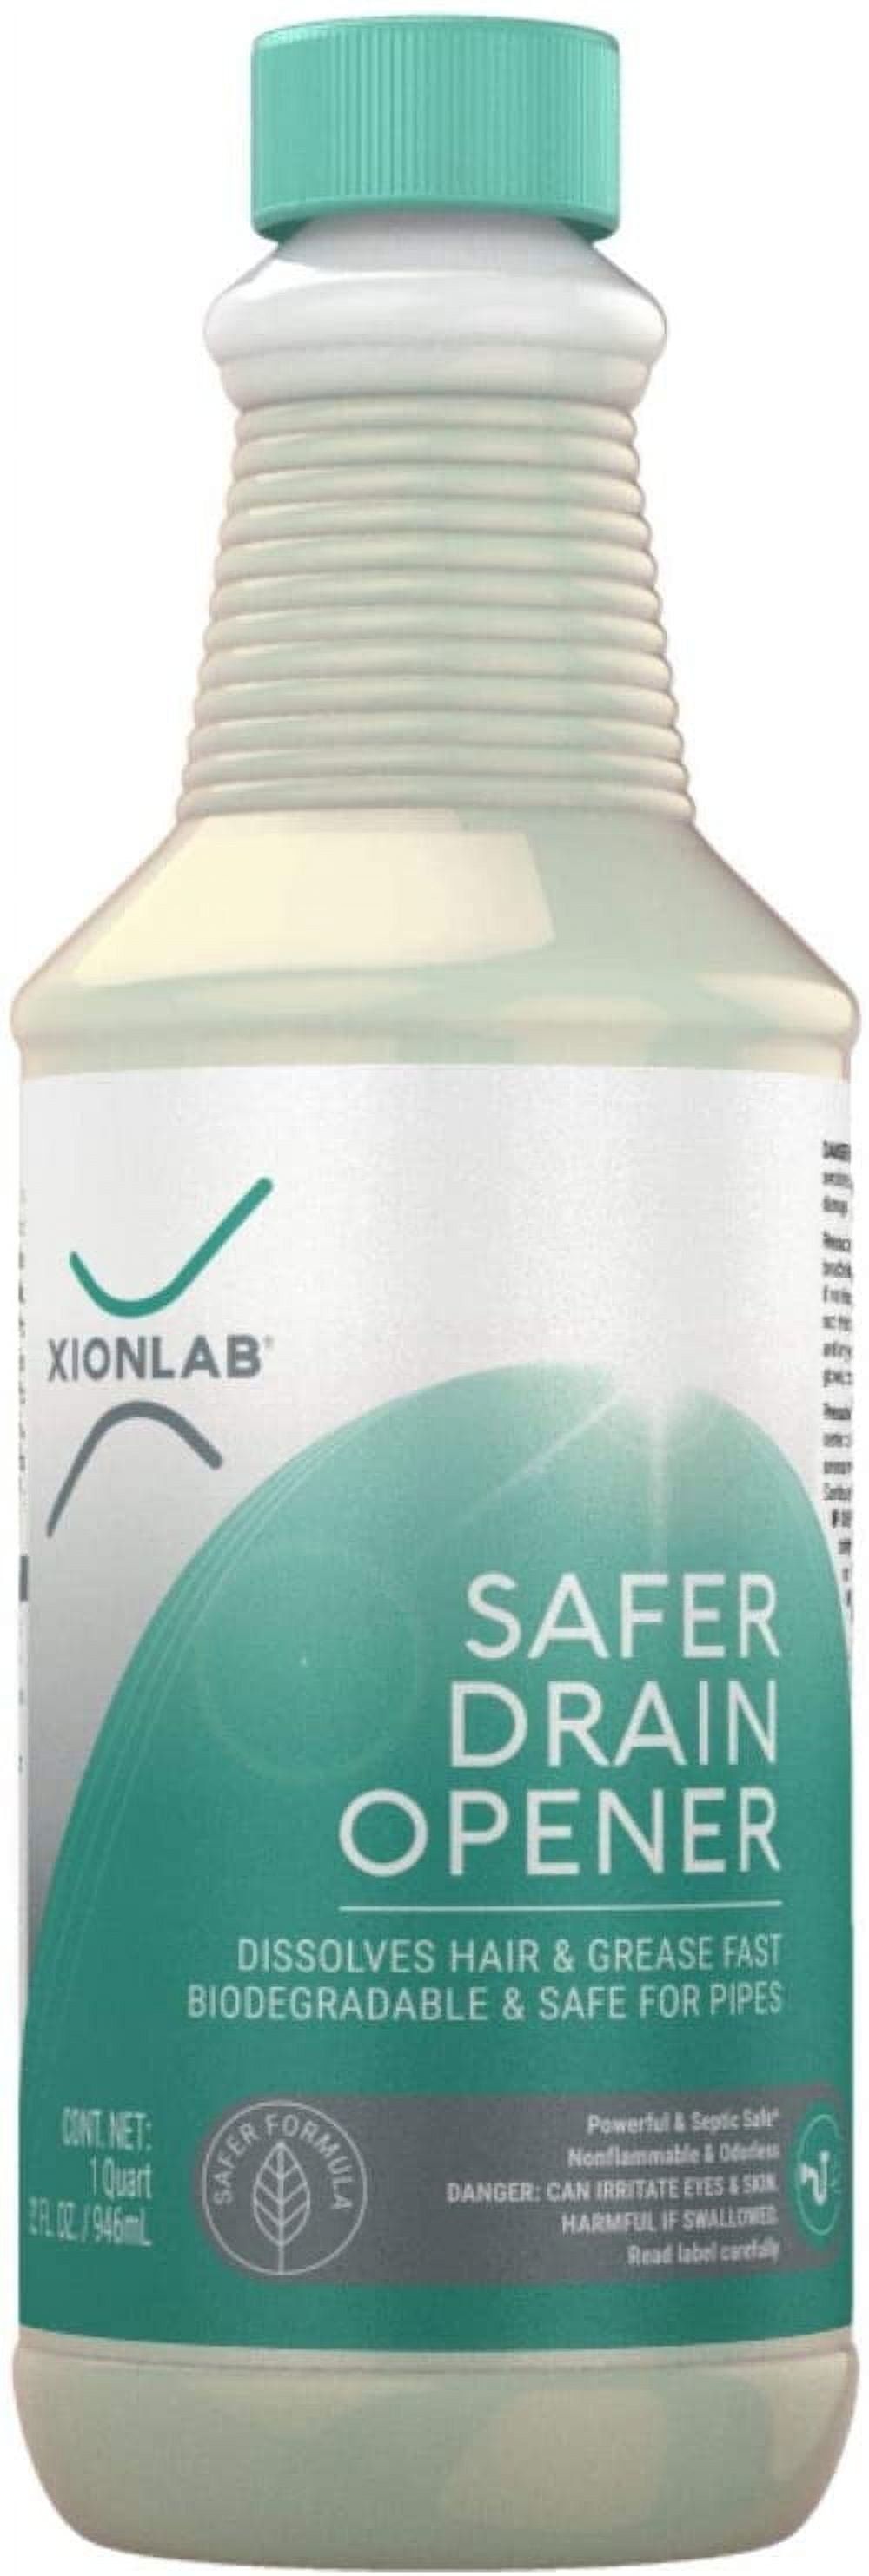 XionLab Safer Greener Drain Clog Remover Industrial-Strength